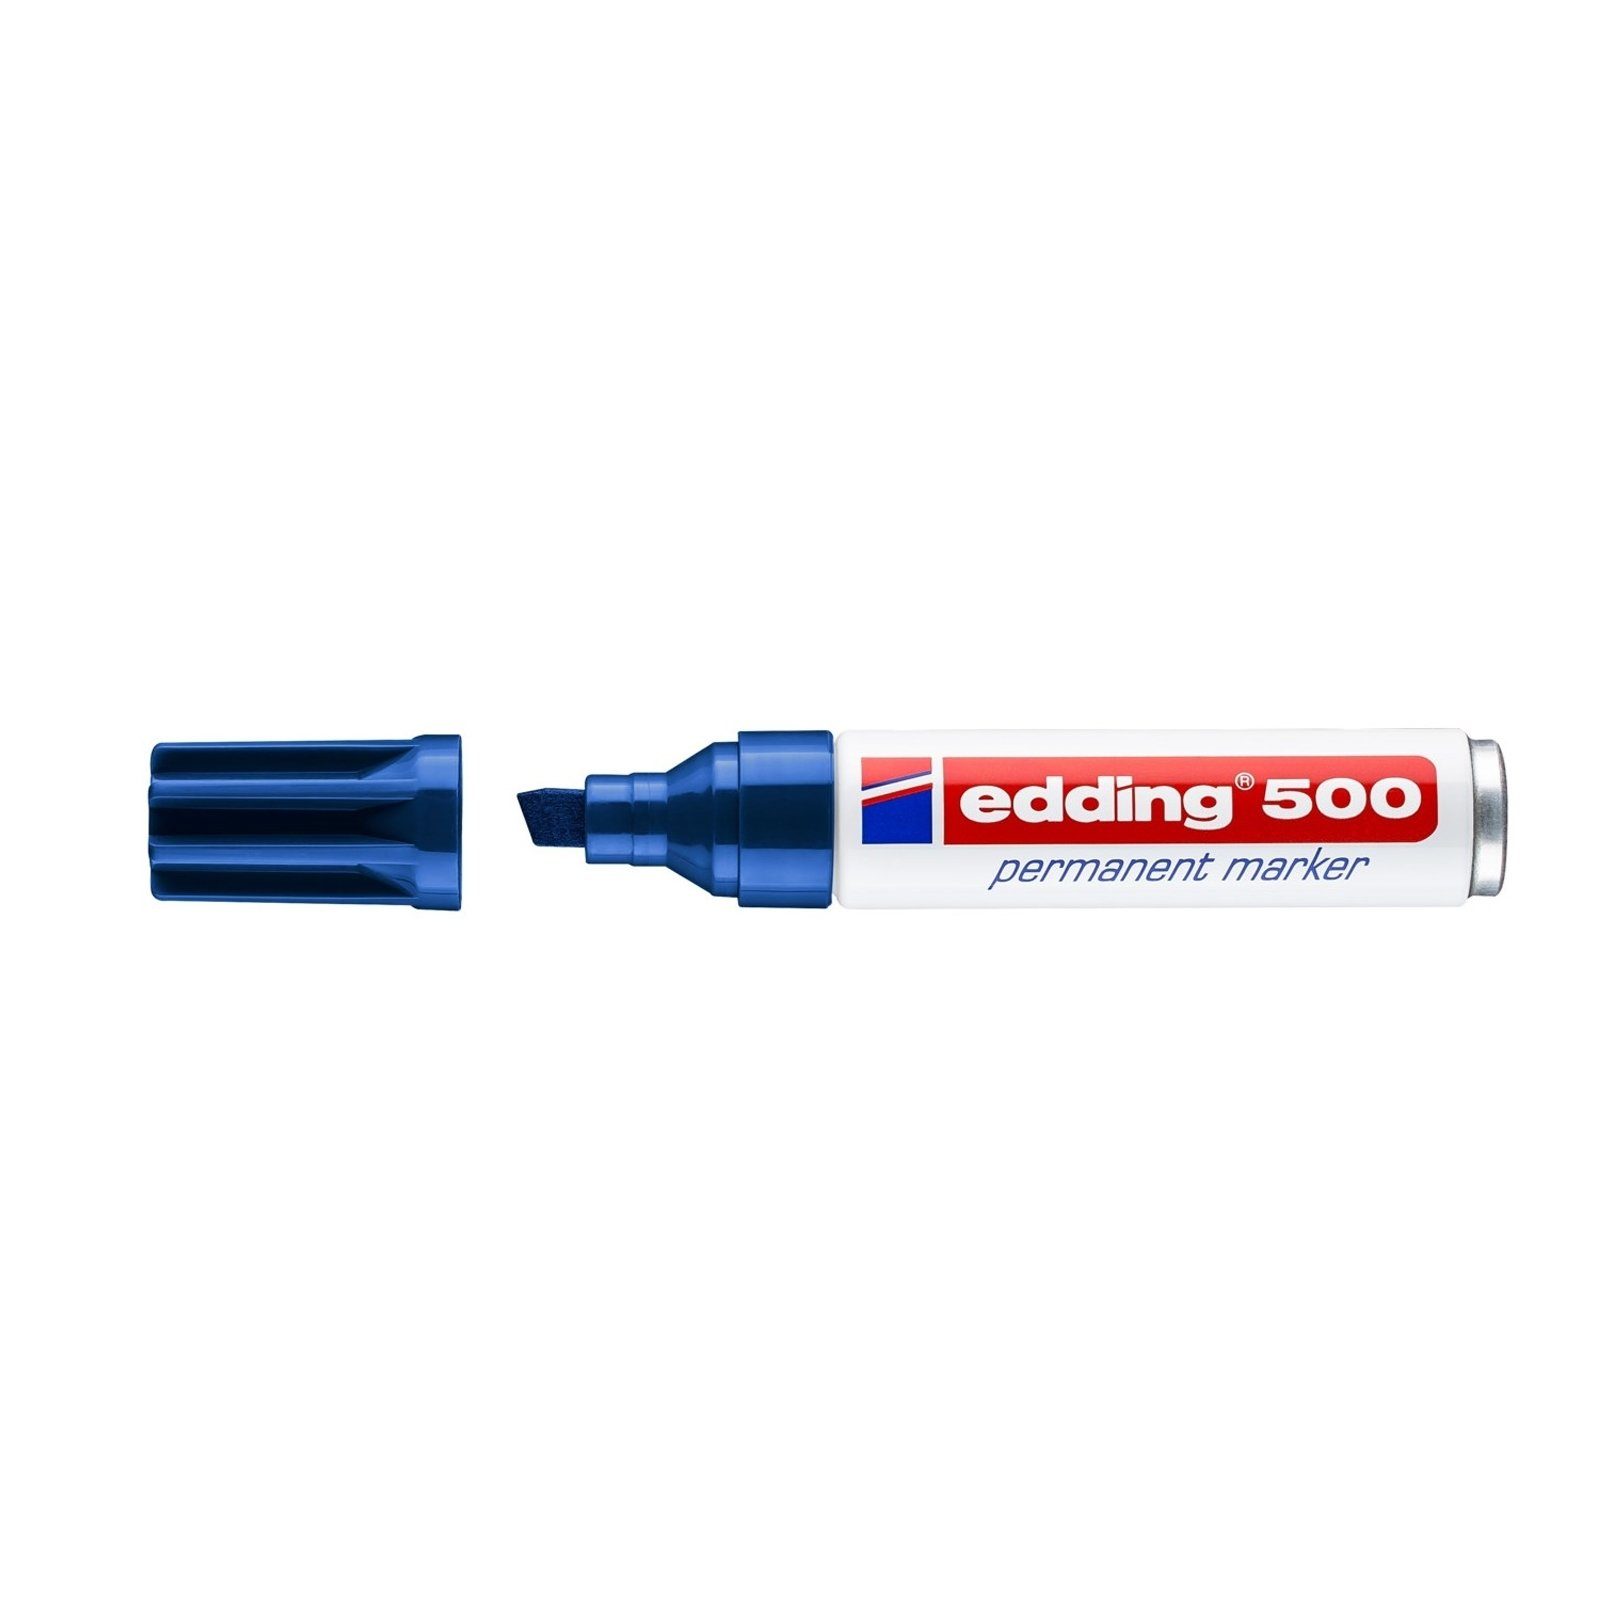 edding Permanentmarker Permanent-Marker 2-7 mm edding 500, (Stück, 1-tlg), Filzstift wasserfest Blau